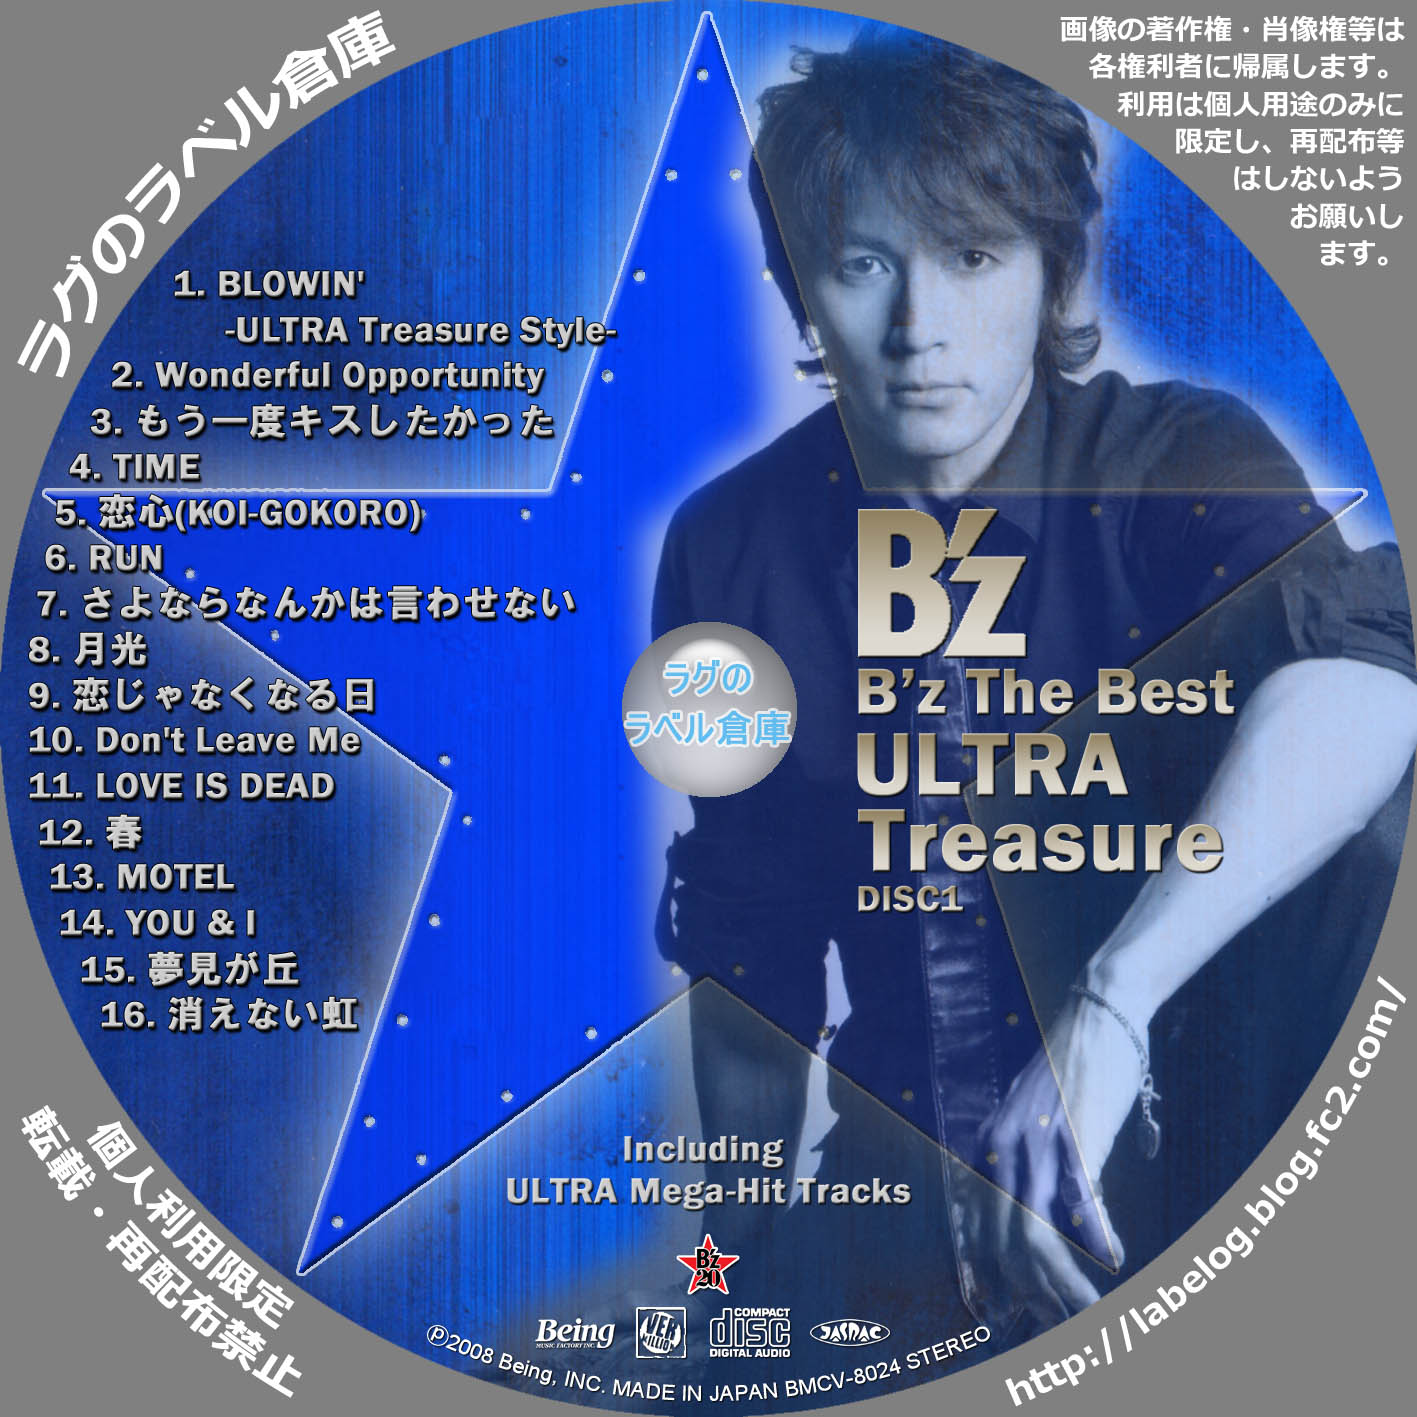 B'z The Best “ULTRA Treasure” | ラグの CD / DVD / BD 自作ラベル倉庫